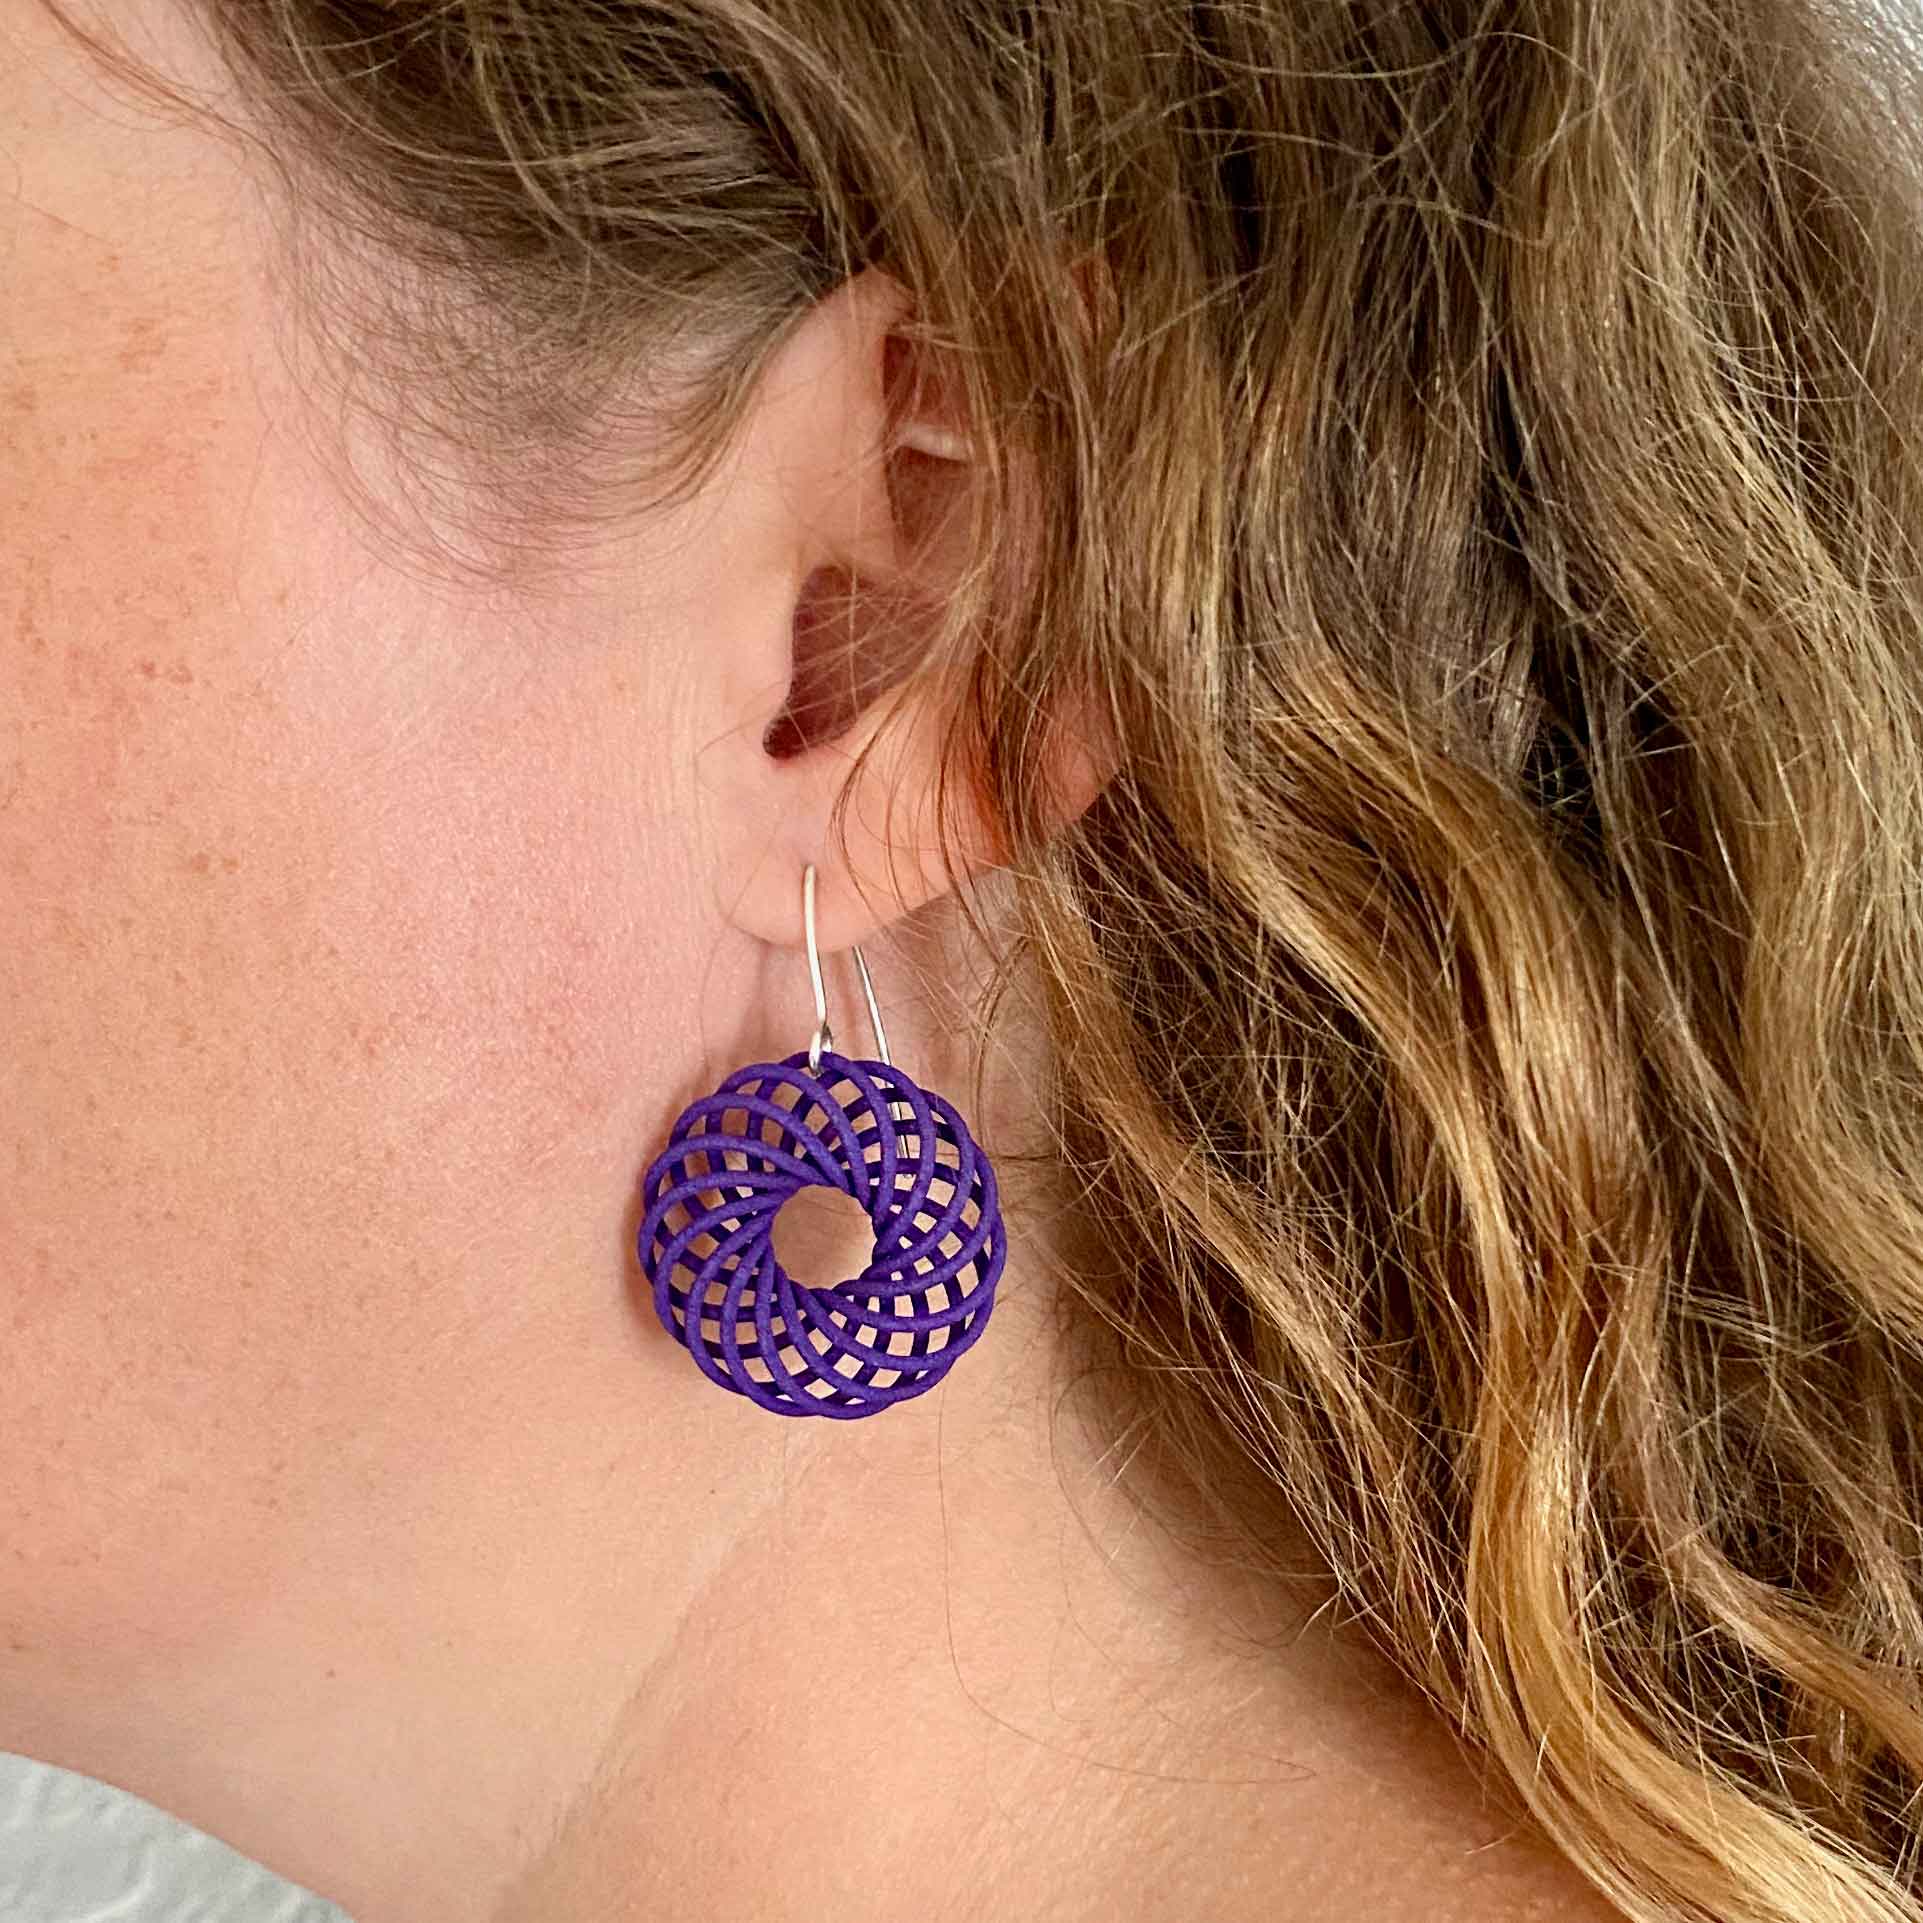 Katy wearing small purple Vortex 3D printed nylon earrings